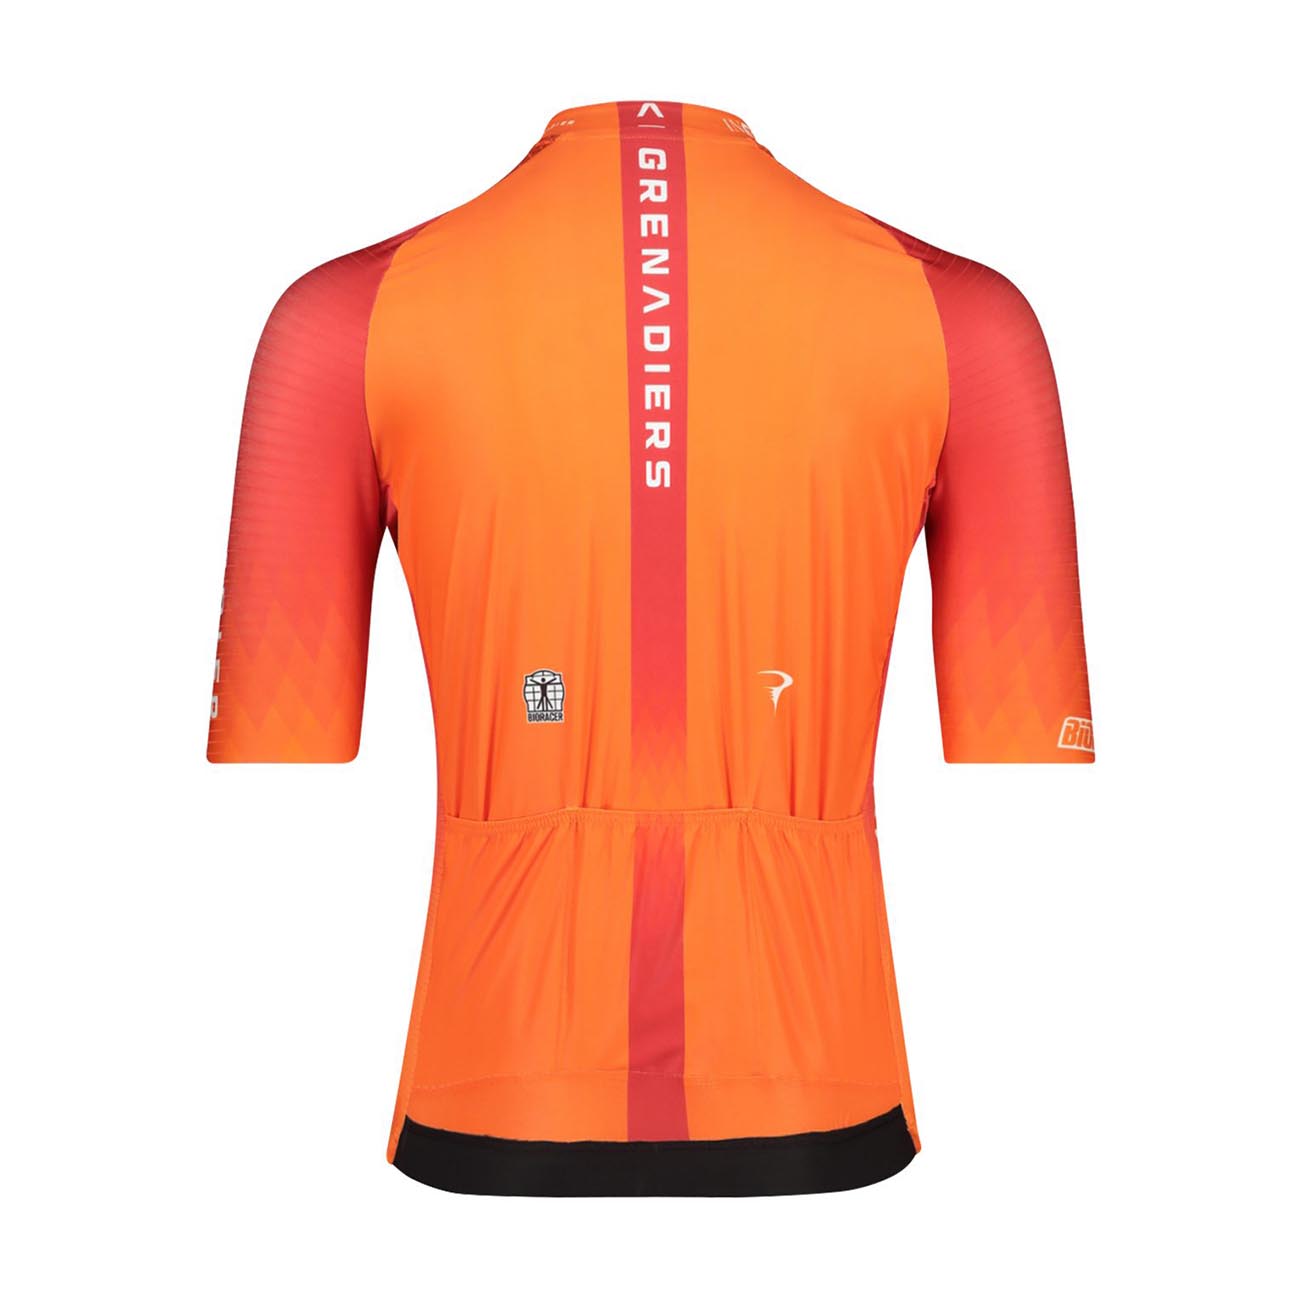 BIORACER Rövid Ujjú Kerékpáros Mez - INEOS GRENADIERS '22 - Narancssárga/piros